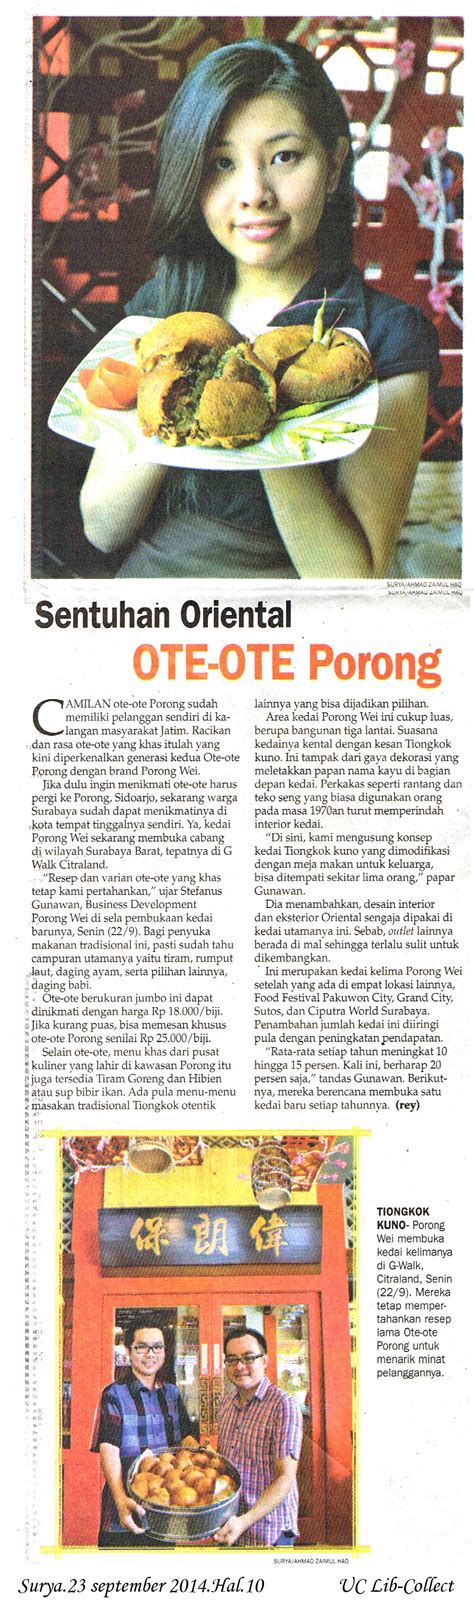 Sentuhan Oriental Ote-ote Porong – Library